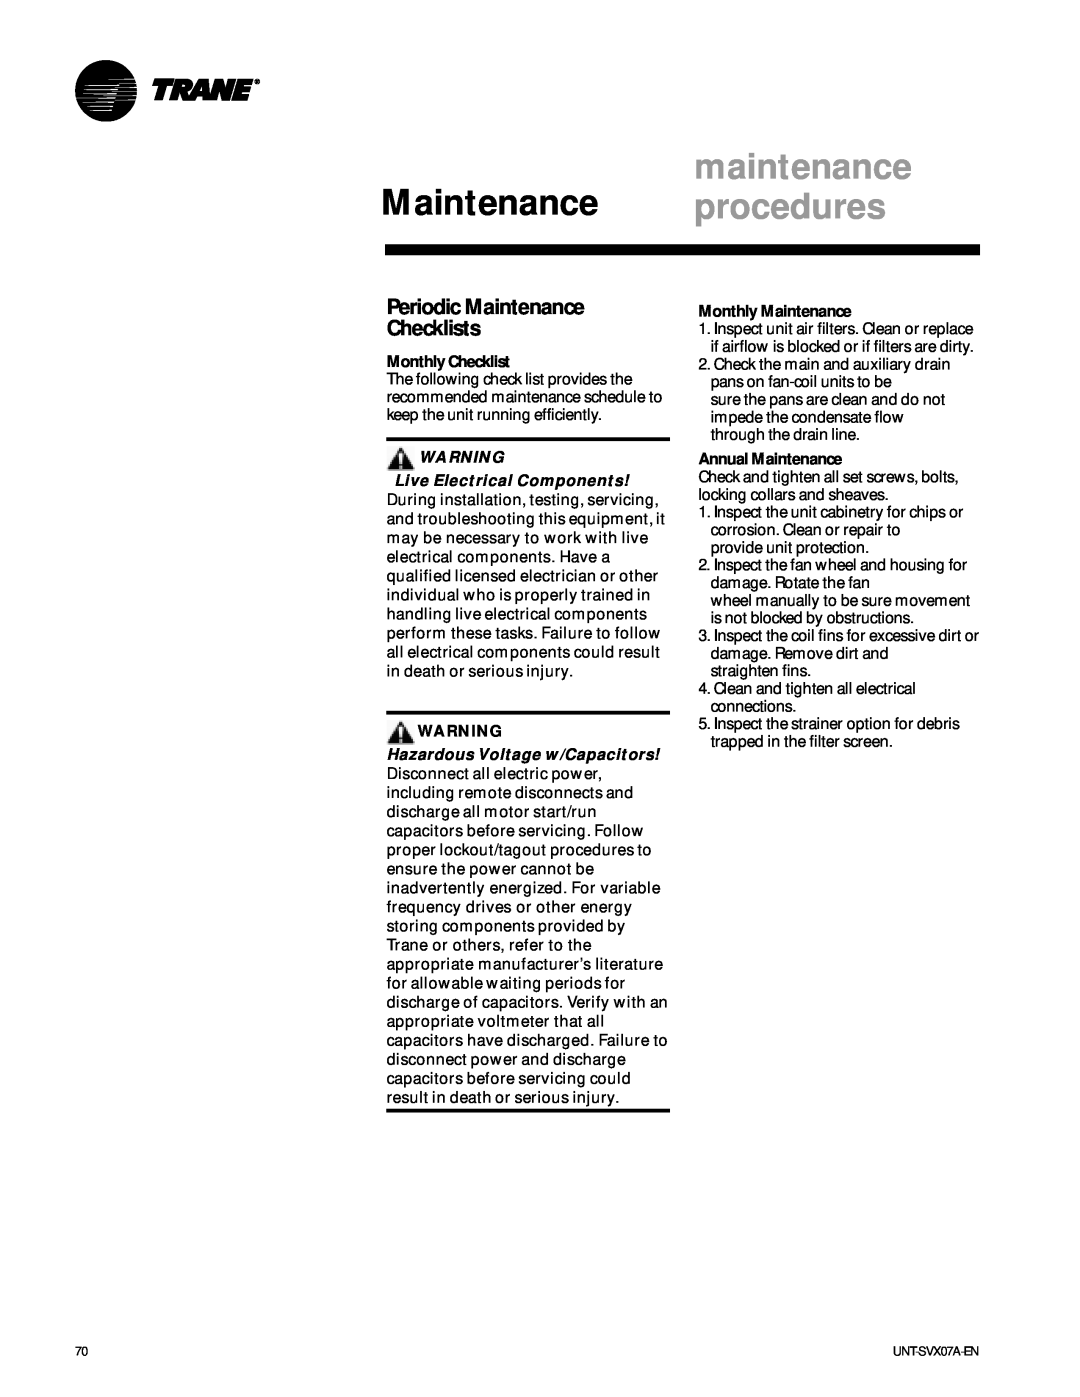 Trane UNT-SVX07A-EN manual Periodic Maintenance Checklists, maintenance, Maintenance procedures, Monthly Checklist 